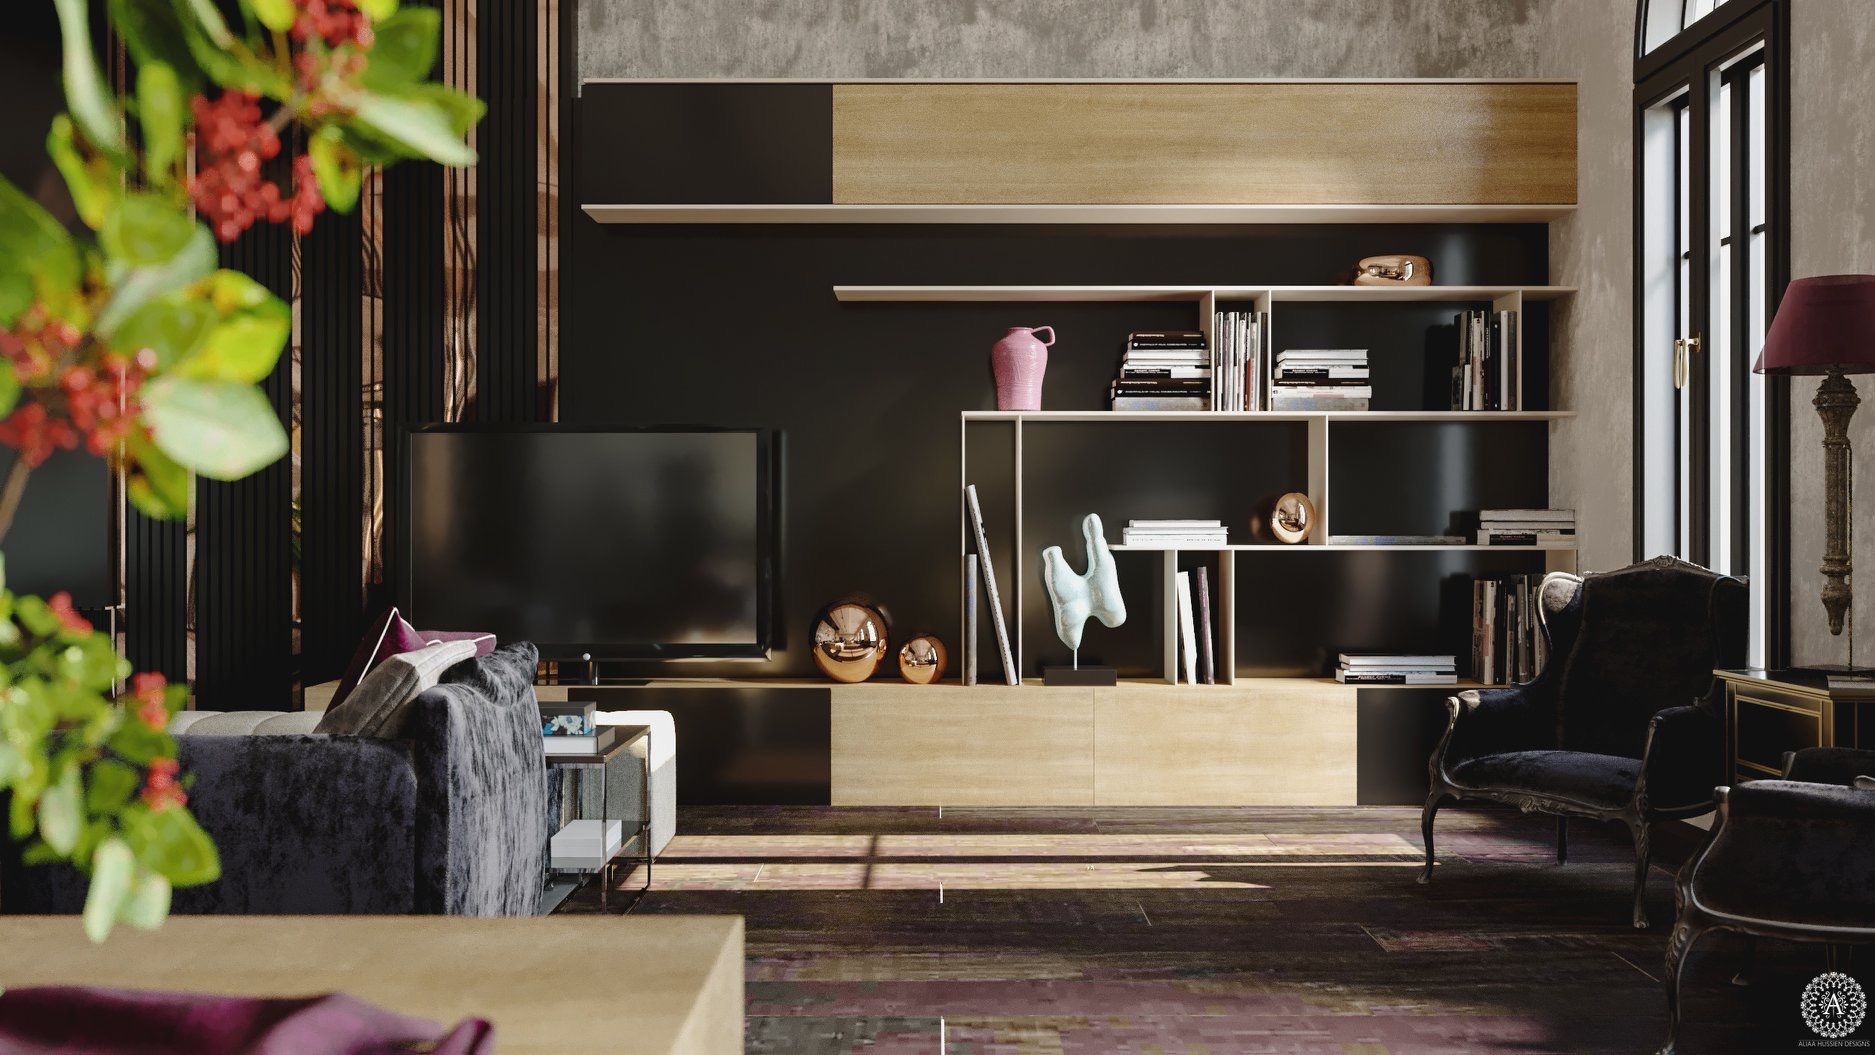 GENEL TASARIMLAR, MAT DİZAYN MAT DİZAYN Ruang keluarga: Ide desain interior, inspirasi & gambar TV stands & cabinets